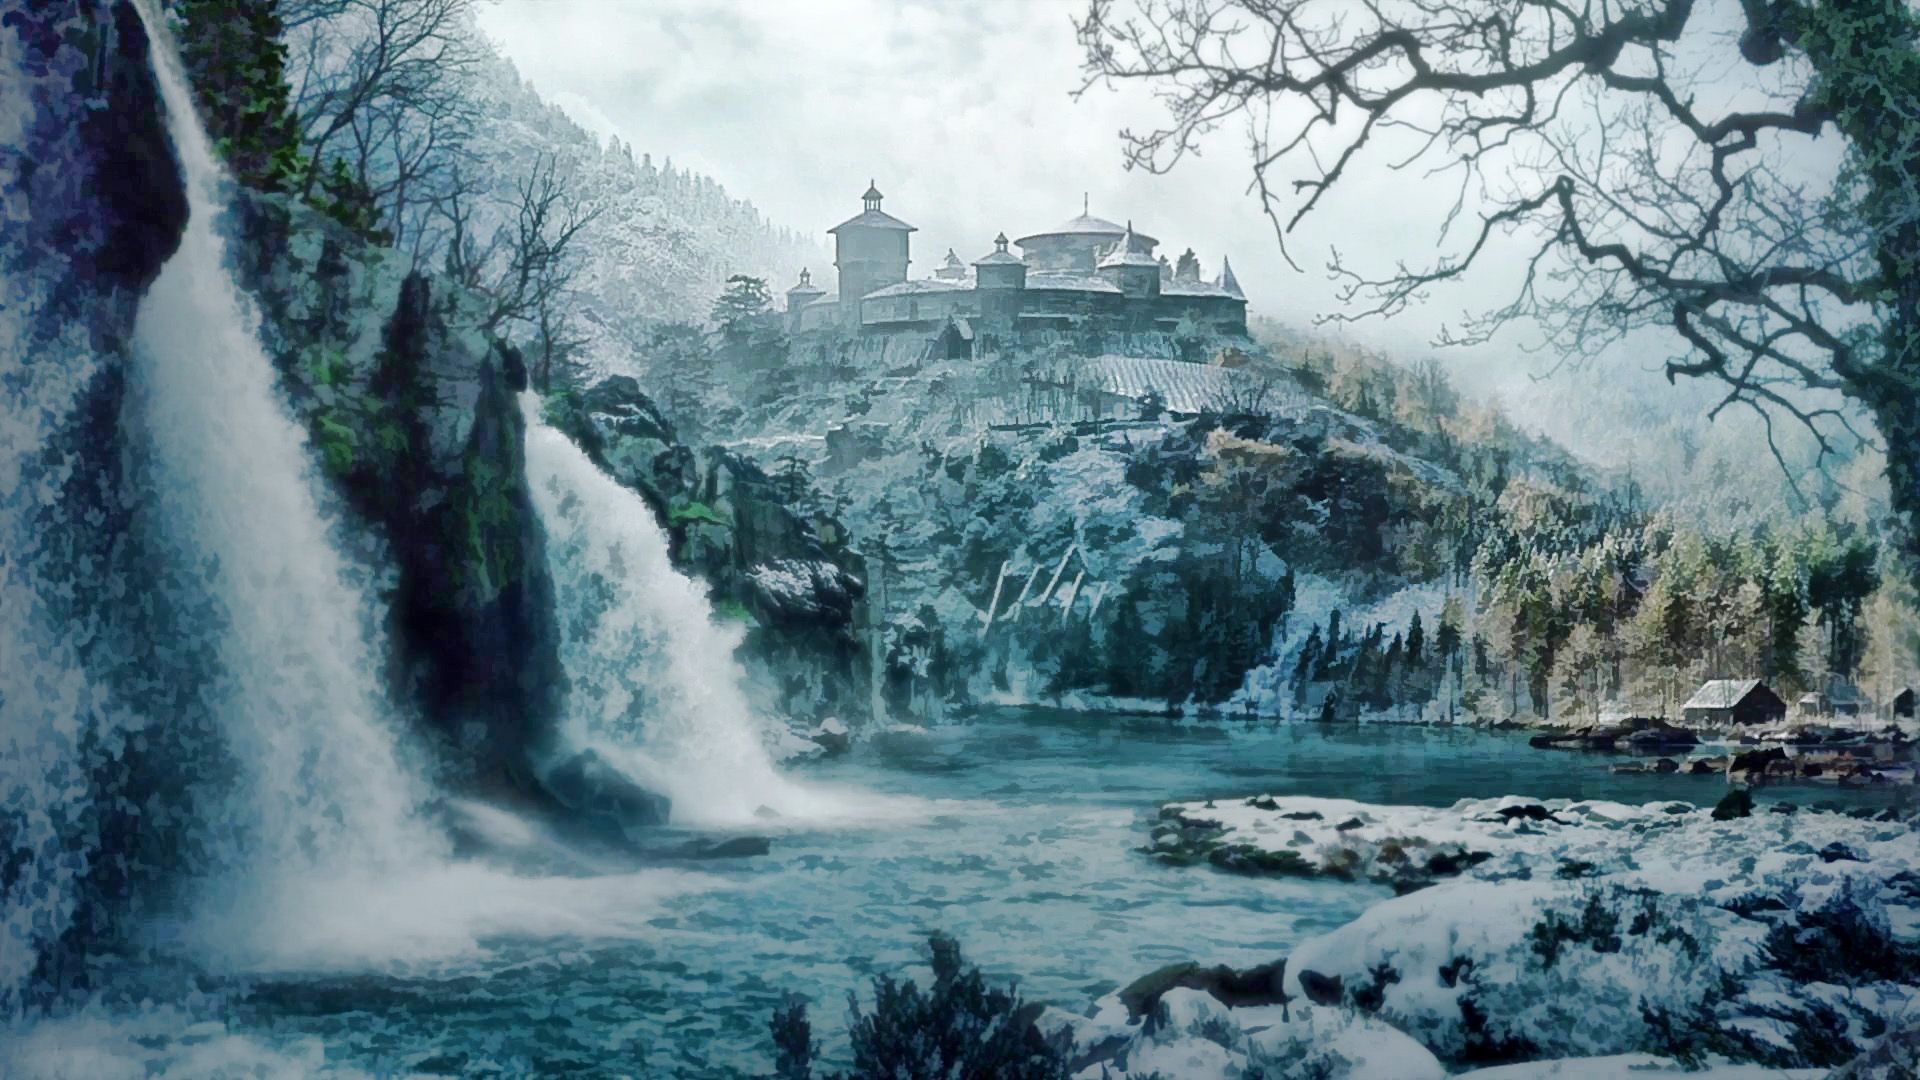 Game of Thrones Landscape Wallpaper